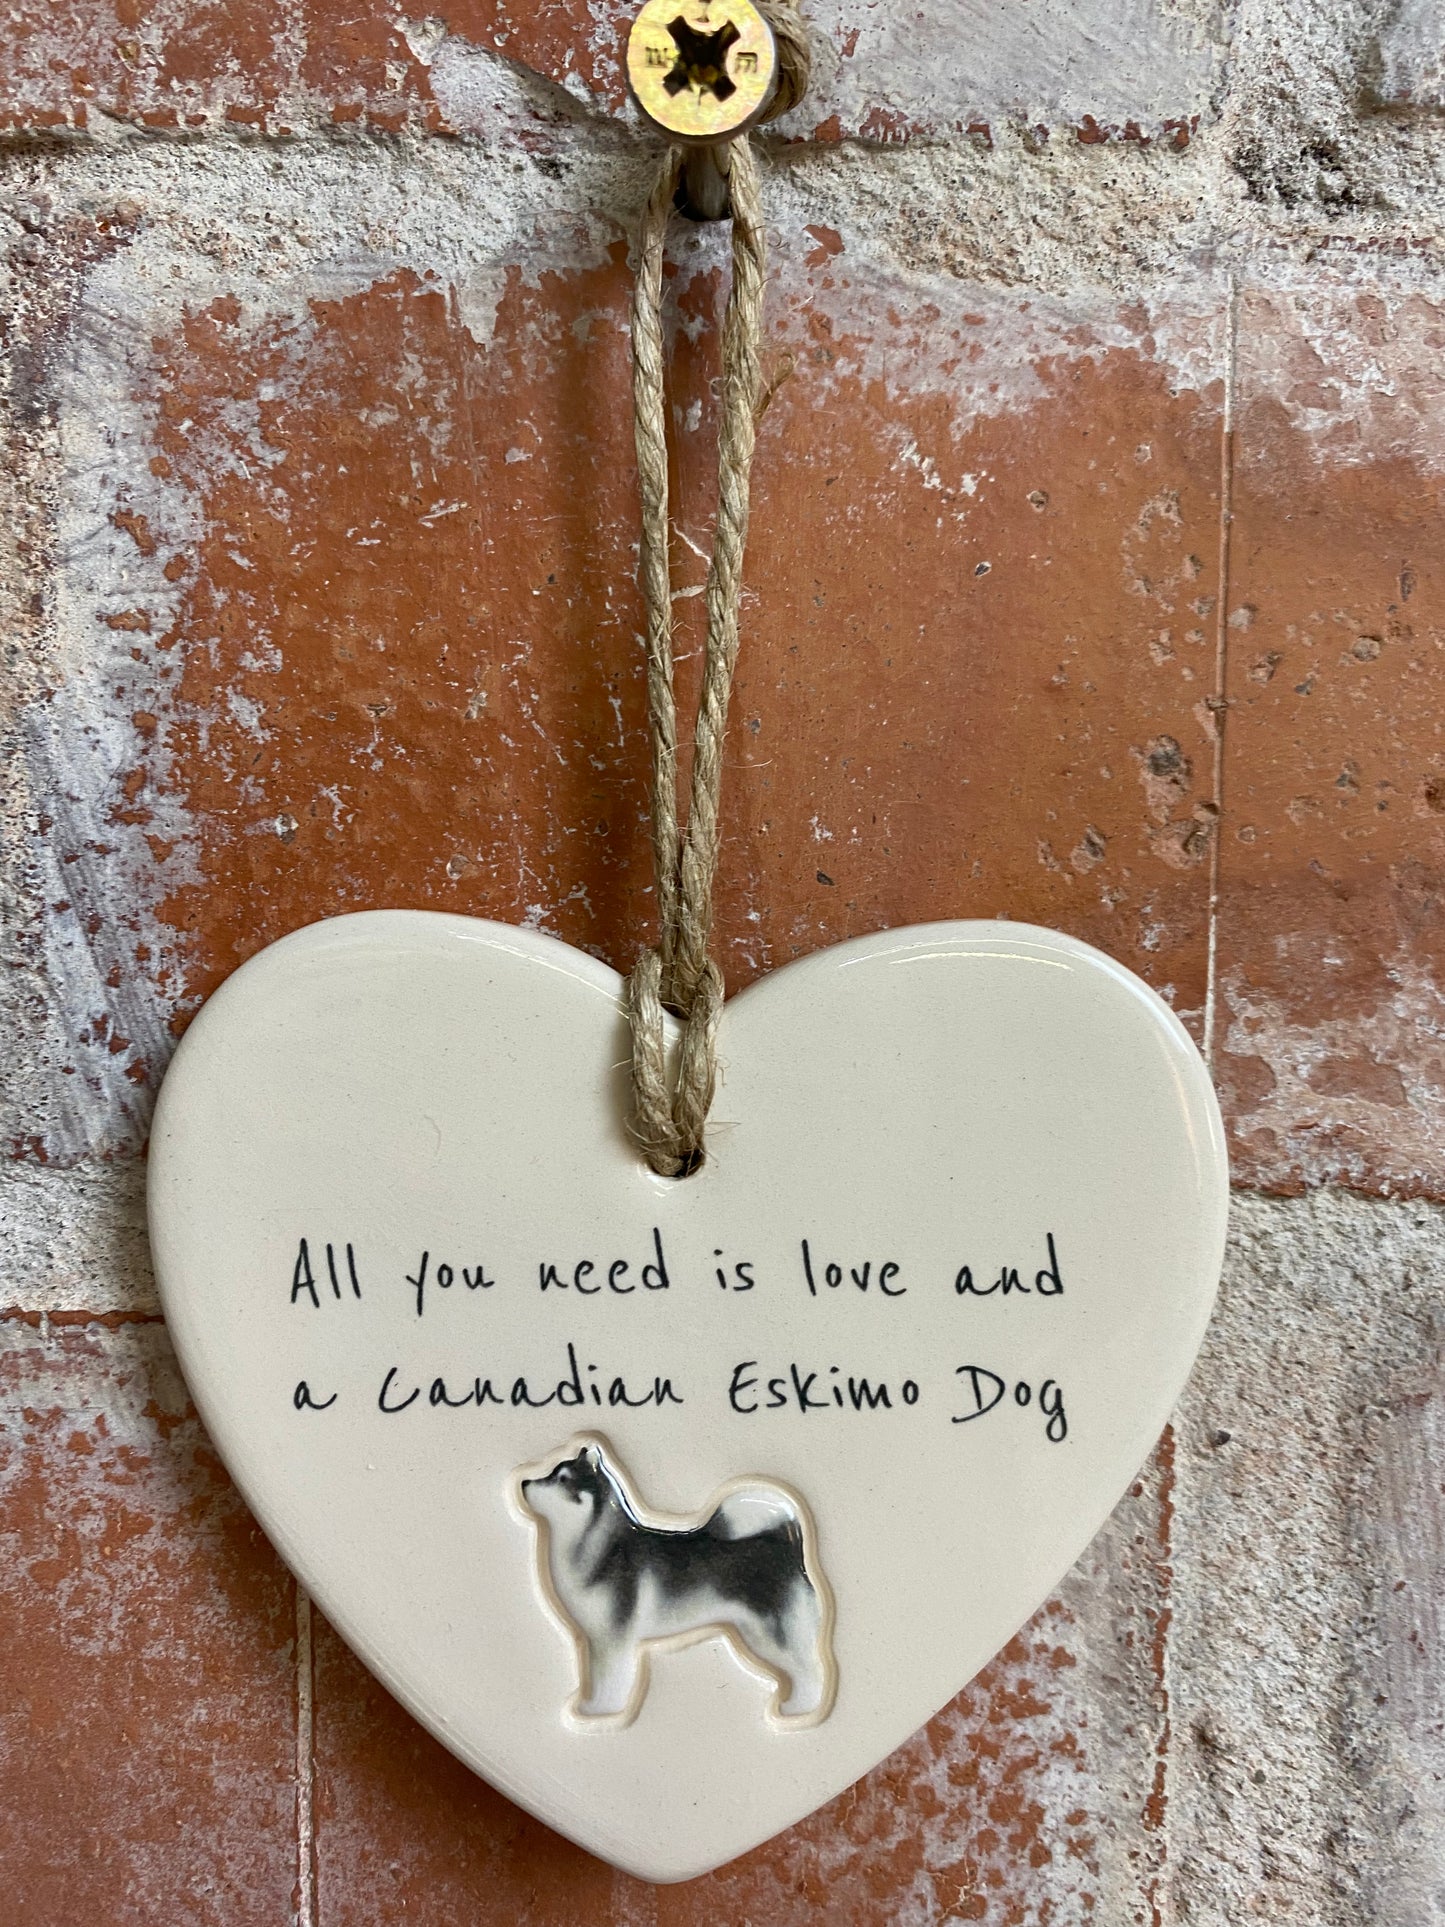 Canadian Eskimo Dog ceramic heart